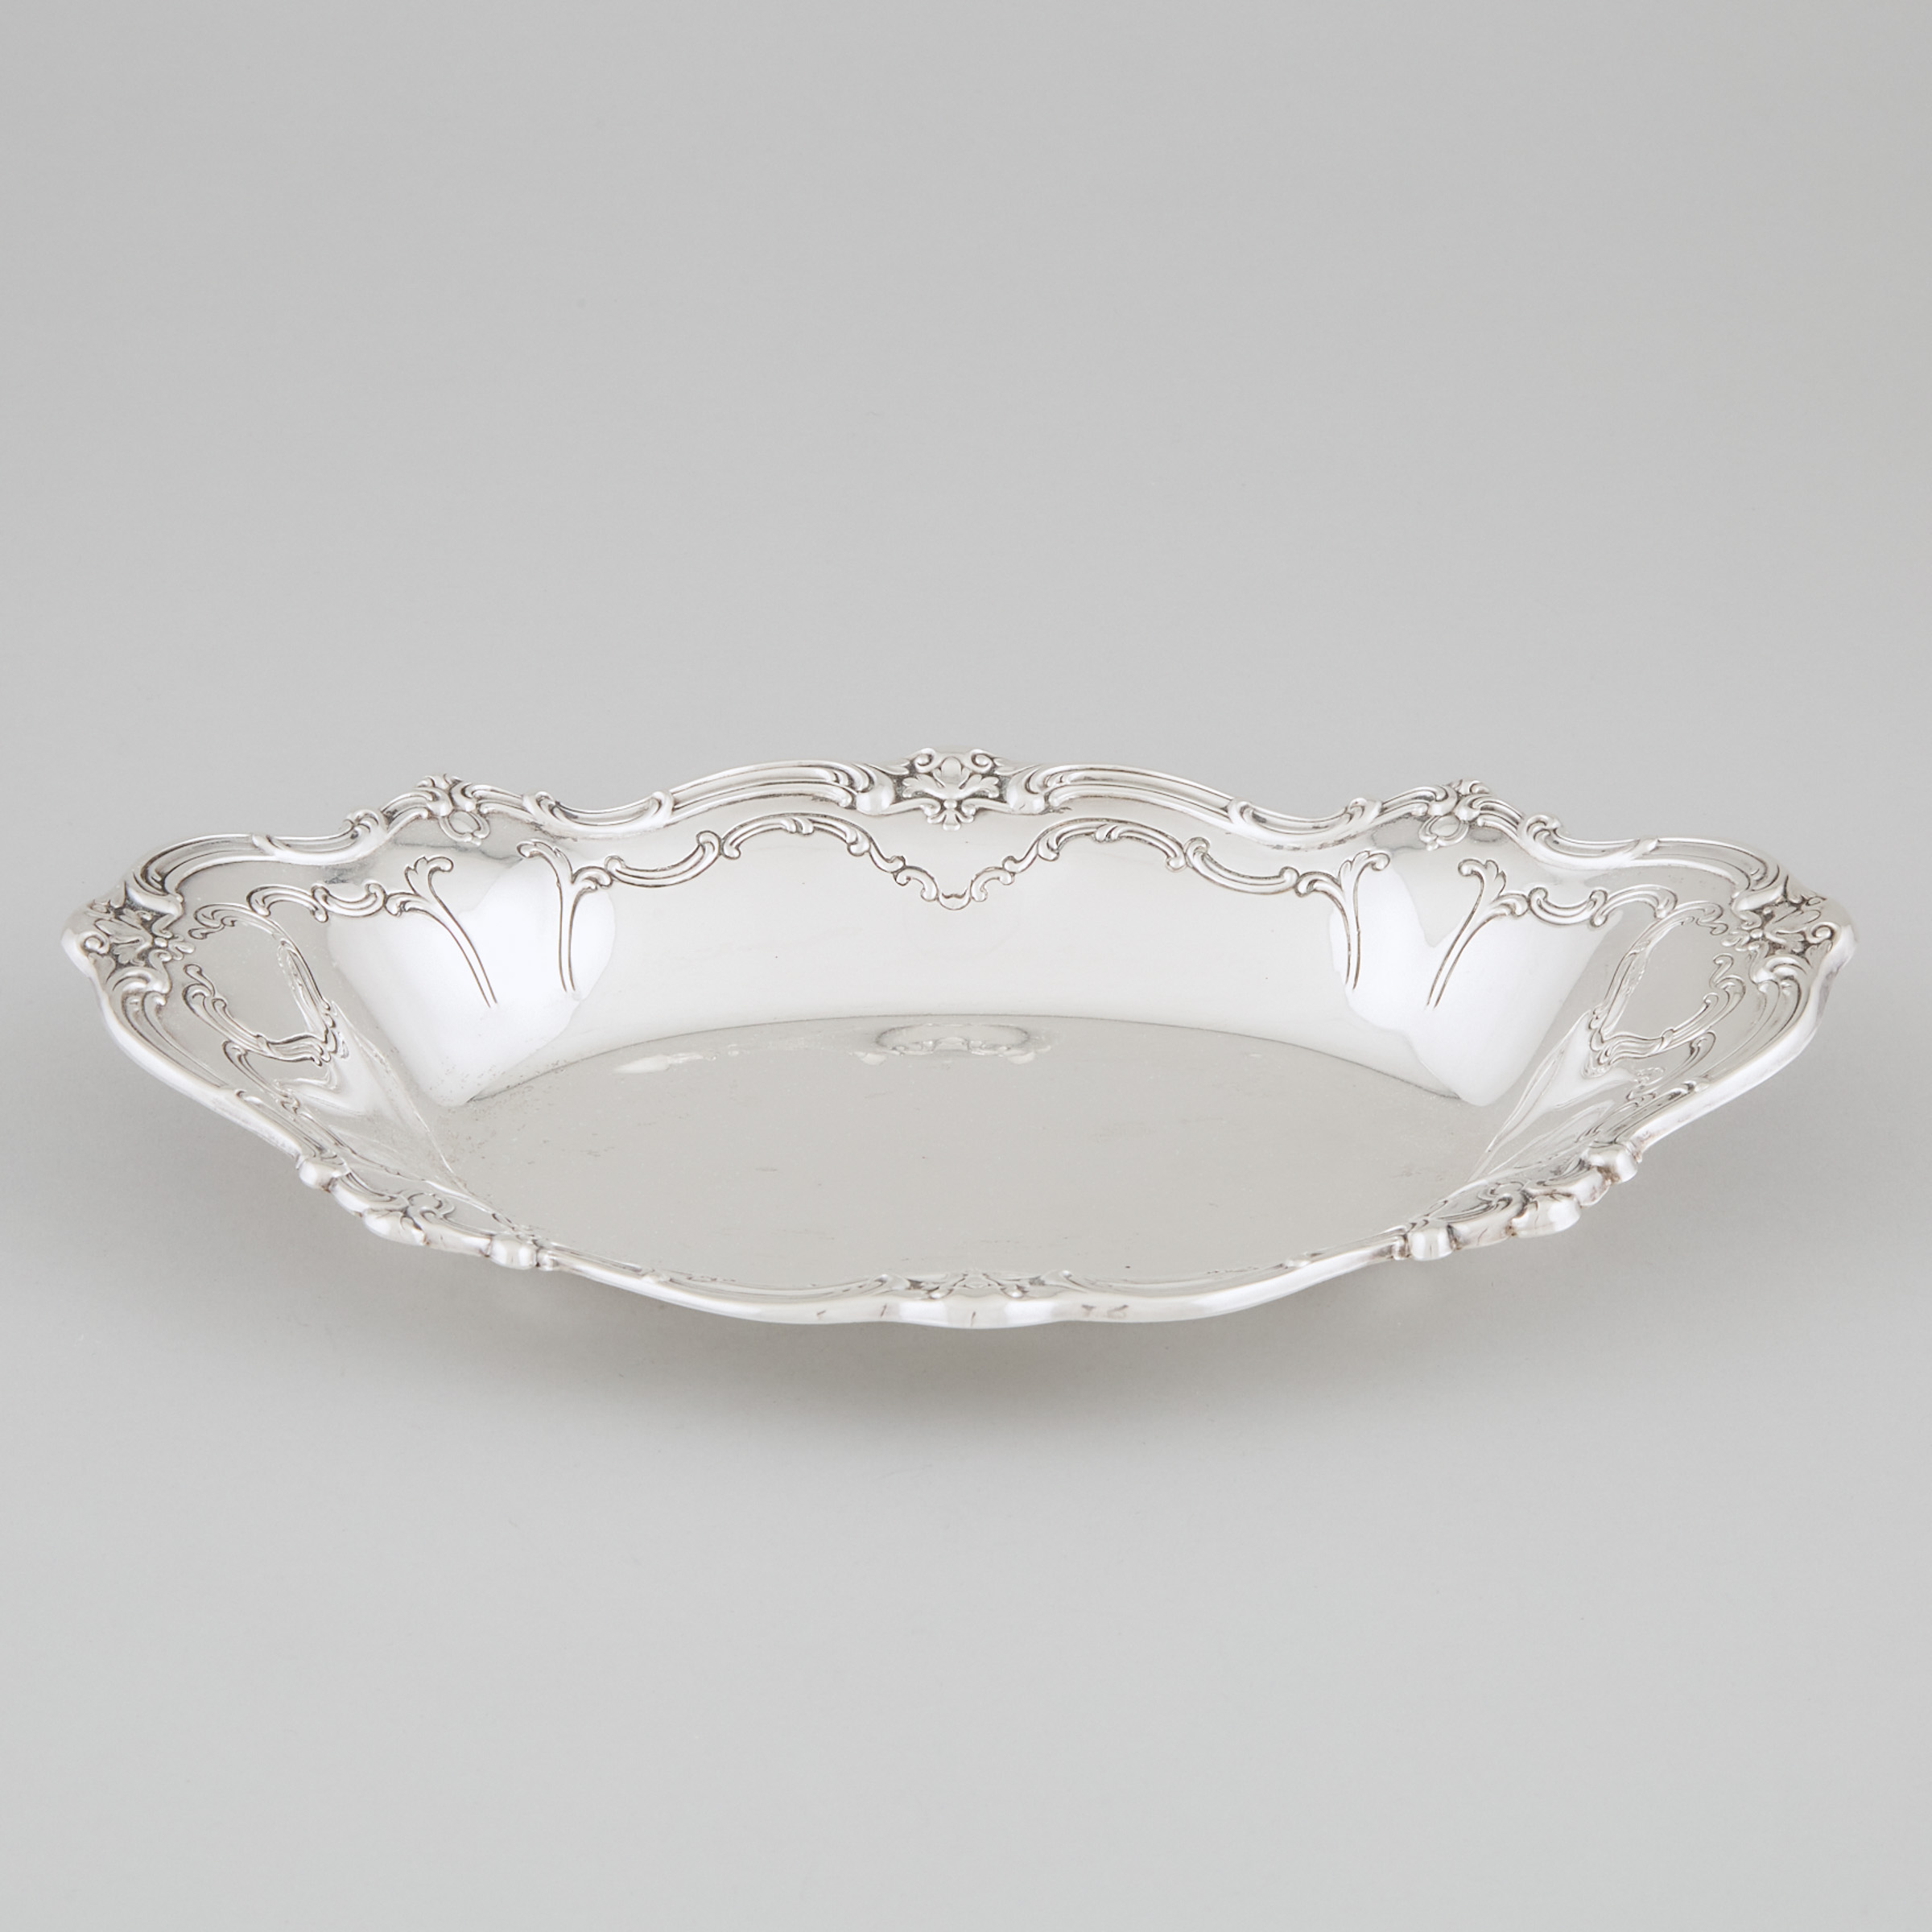 American Silver 'Chantilly' Bread Dish, Gorham Mfg. Co., Providence, R.I., 20th century